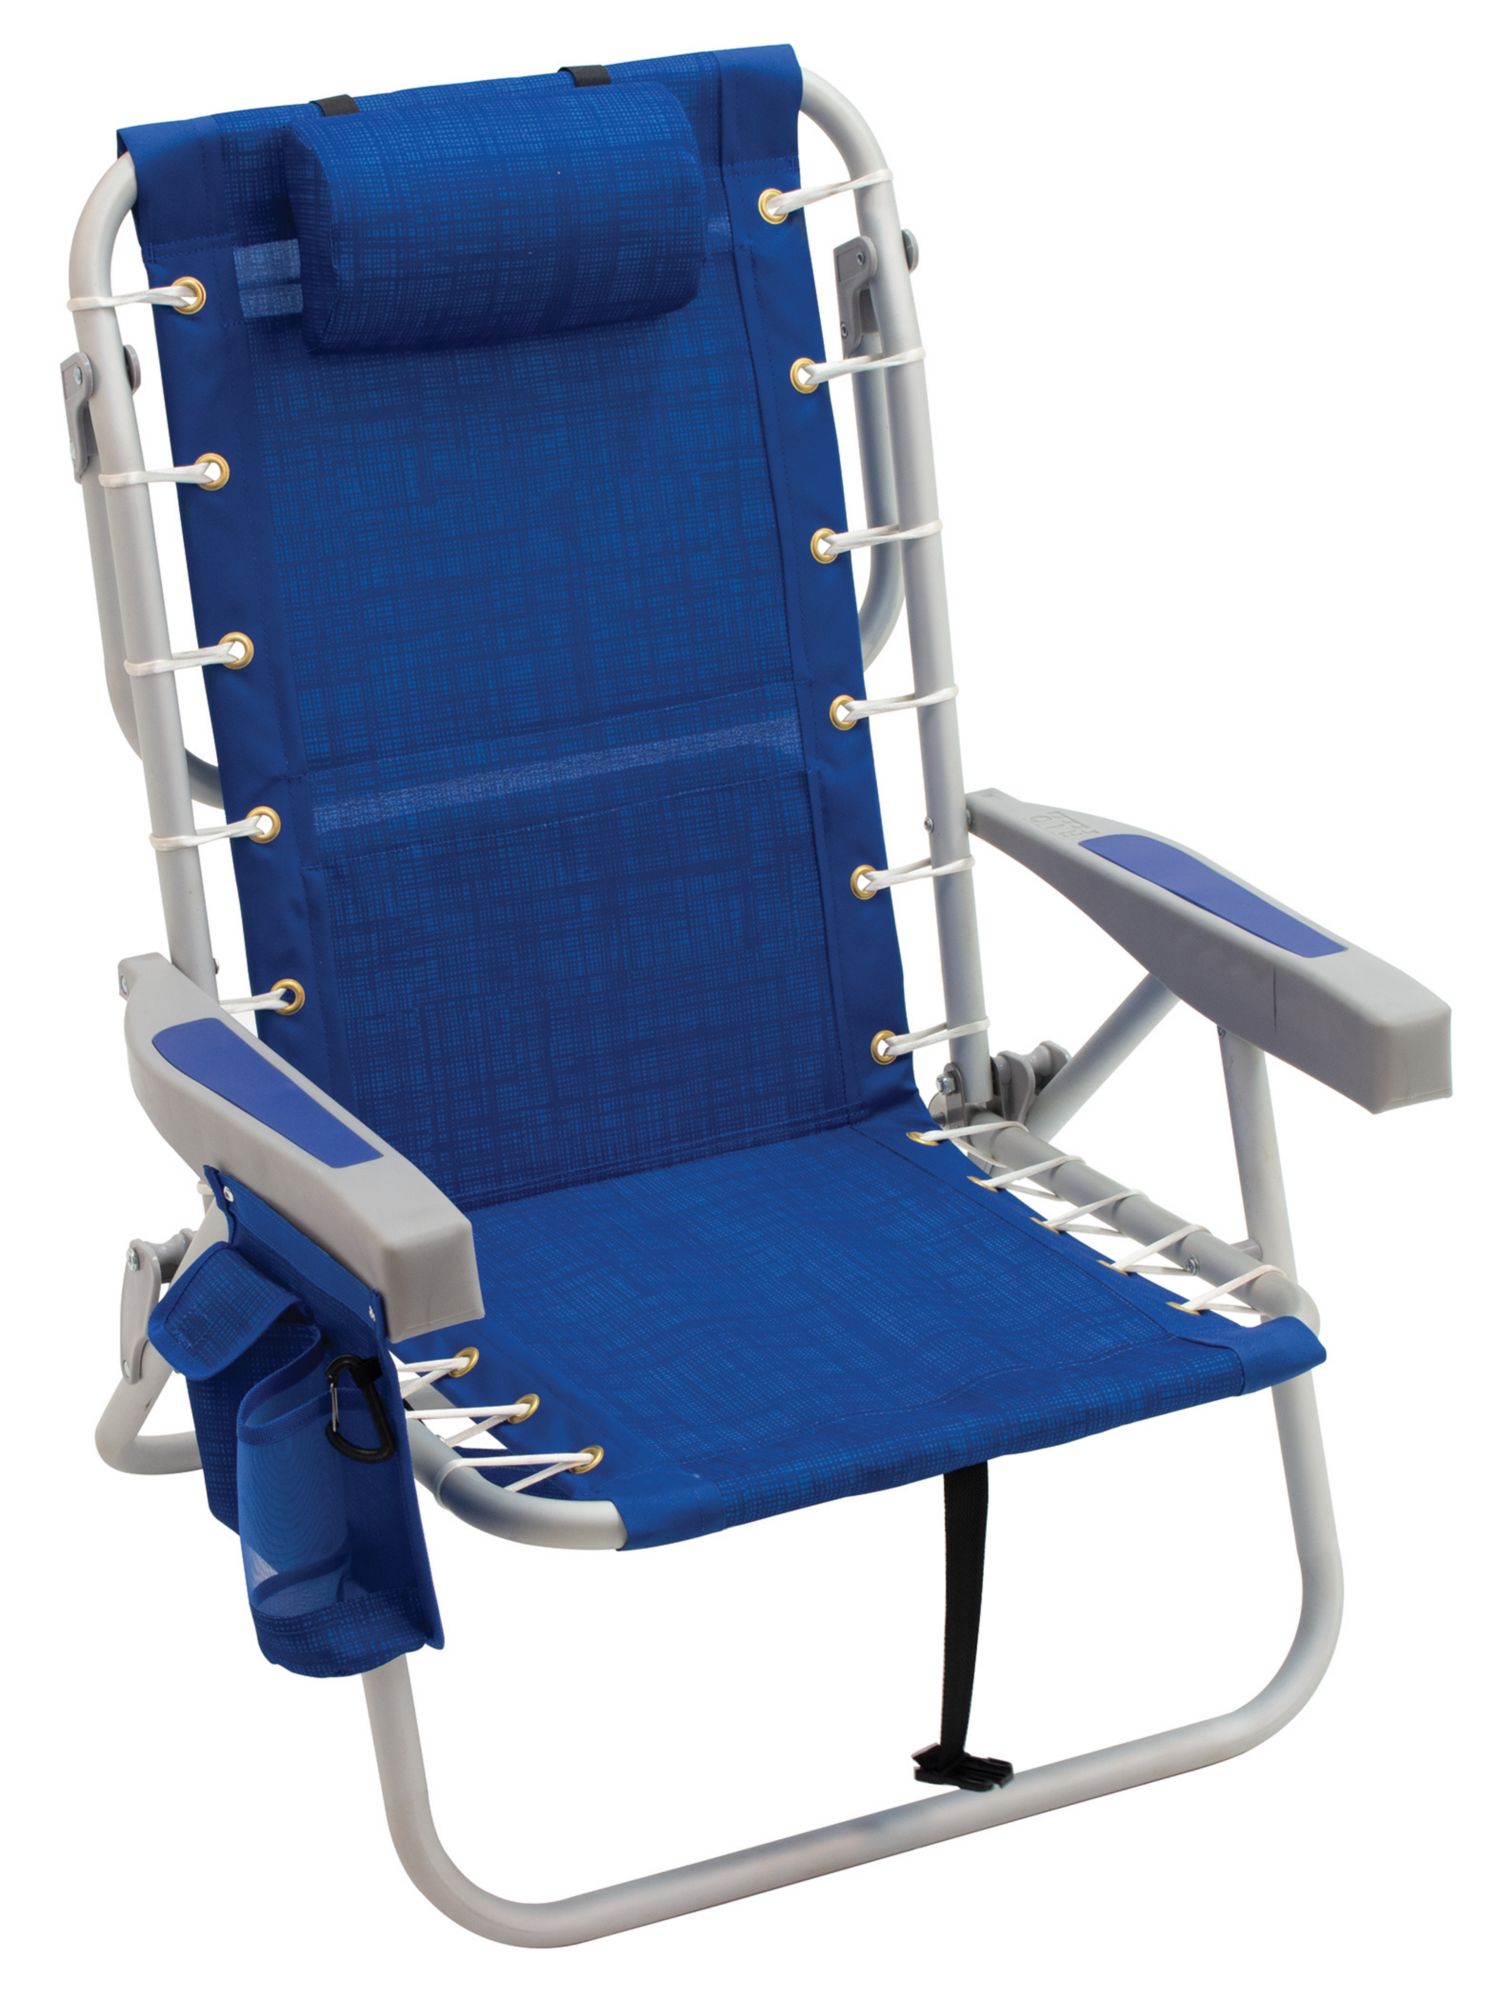 RIO Premium Backpack Beach Chair with 